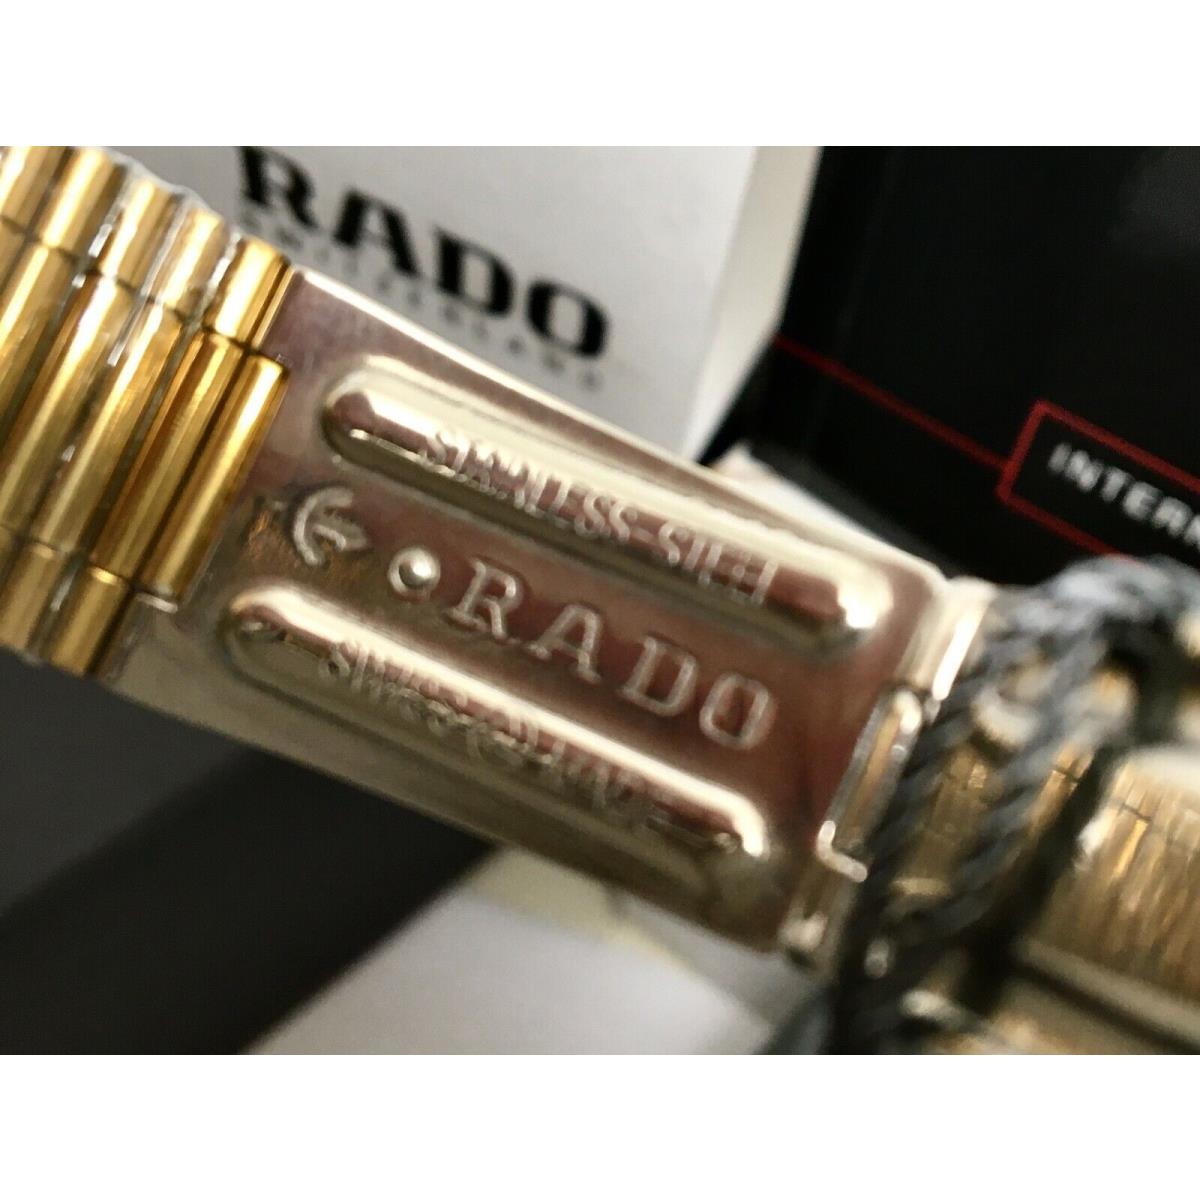 Rado watch Diastar - Gold Dial, Gold Band, Gold Bezel